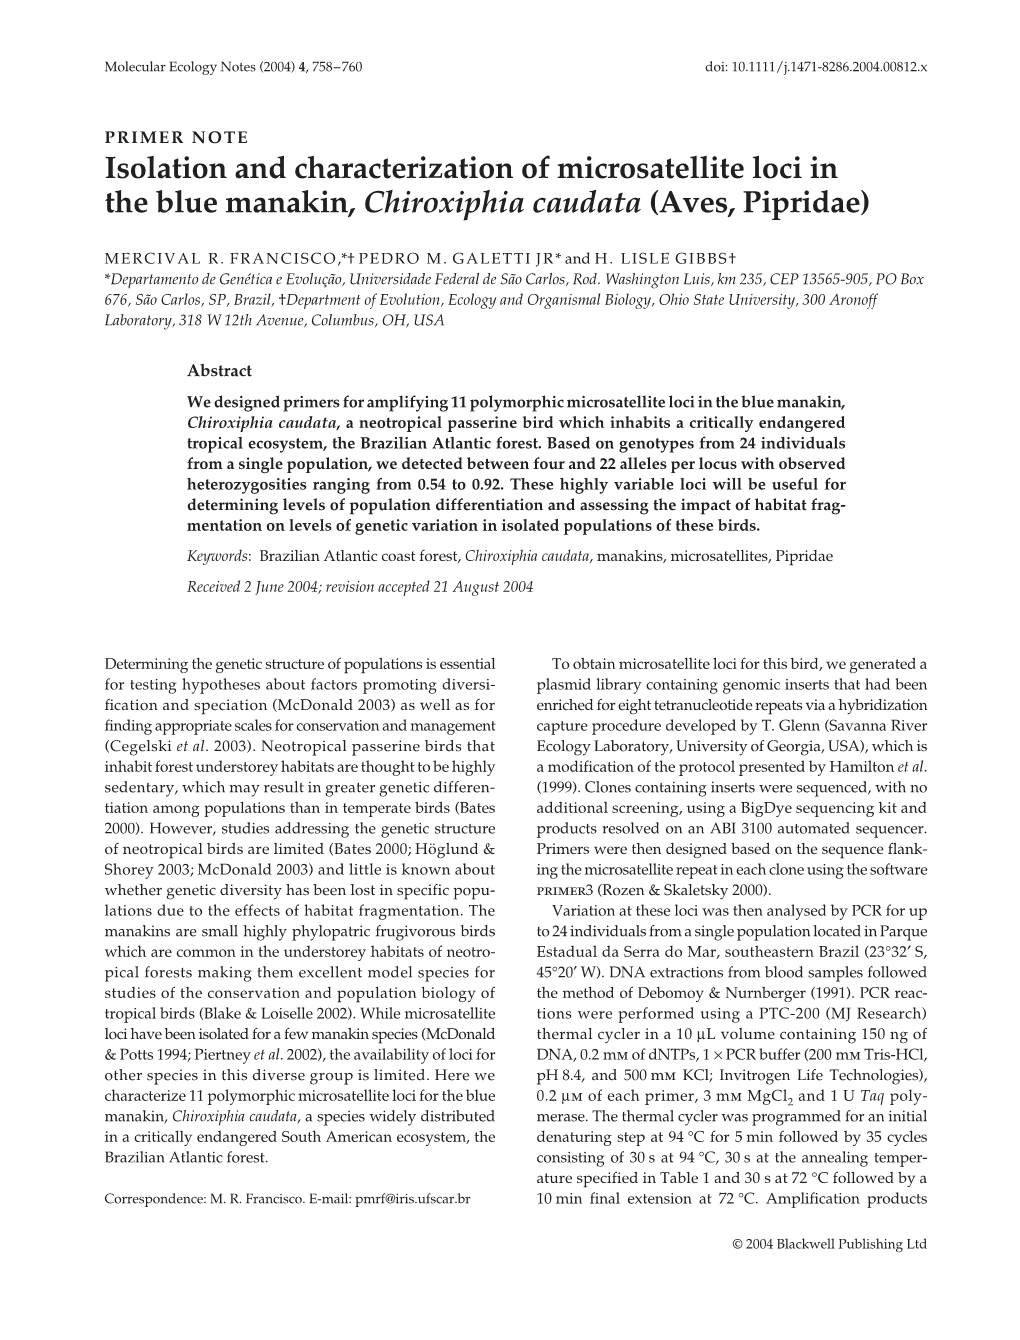 Isolation and Characterization of Microsatellite Loci in the Blue Manakin, Chiroxiphia Caudata (Aves, Pipridae)